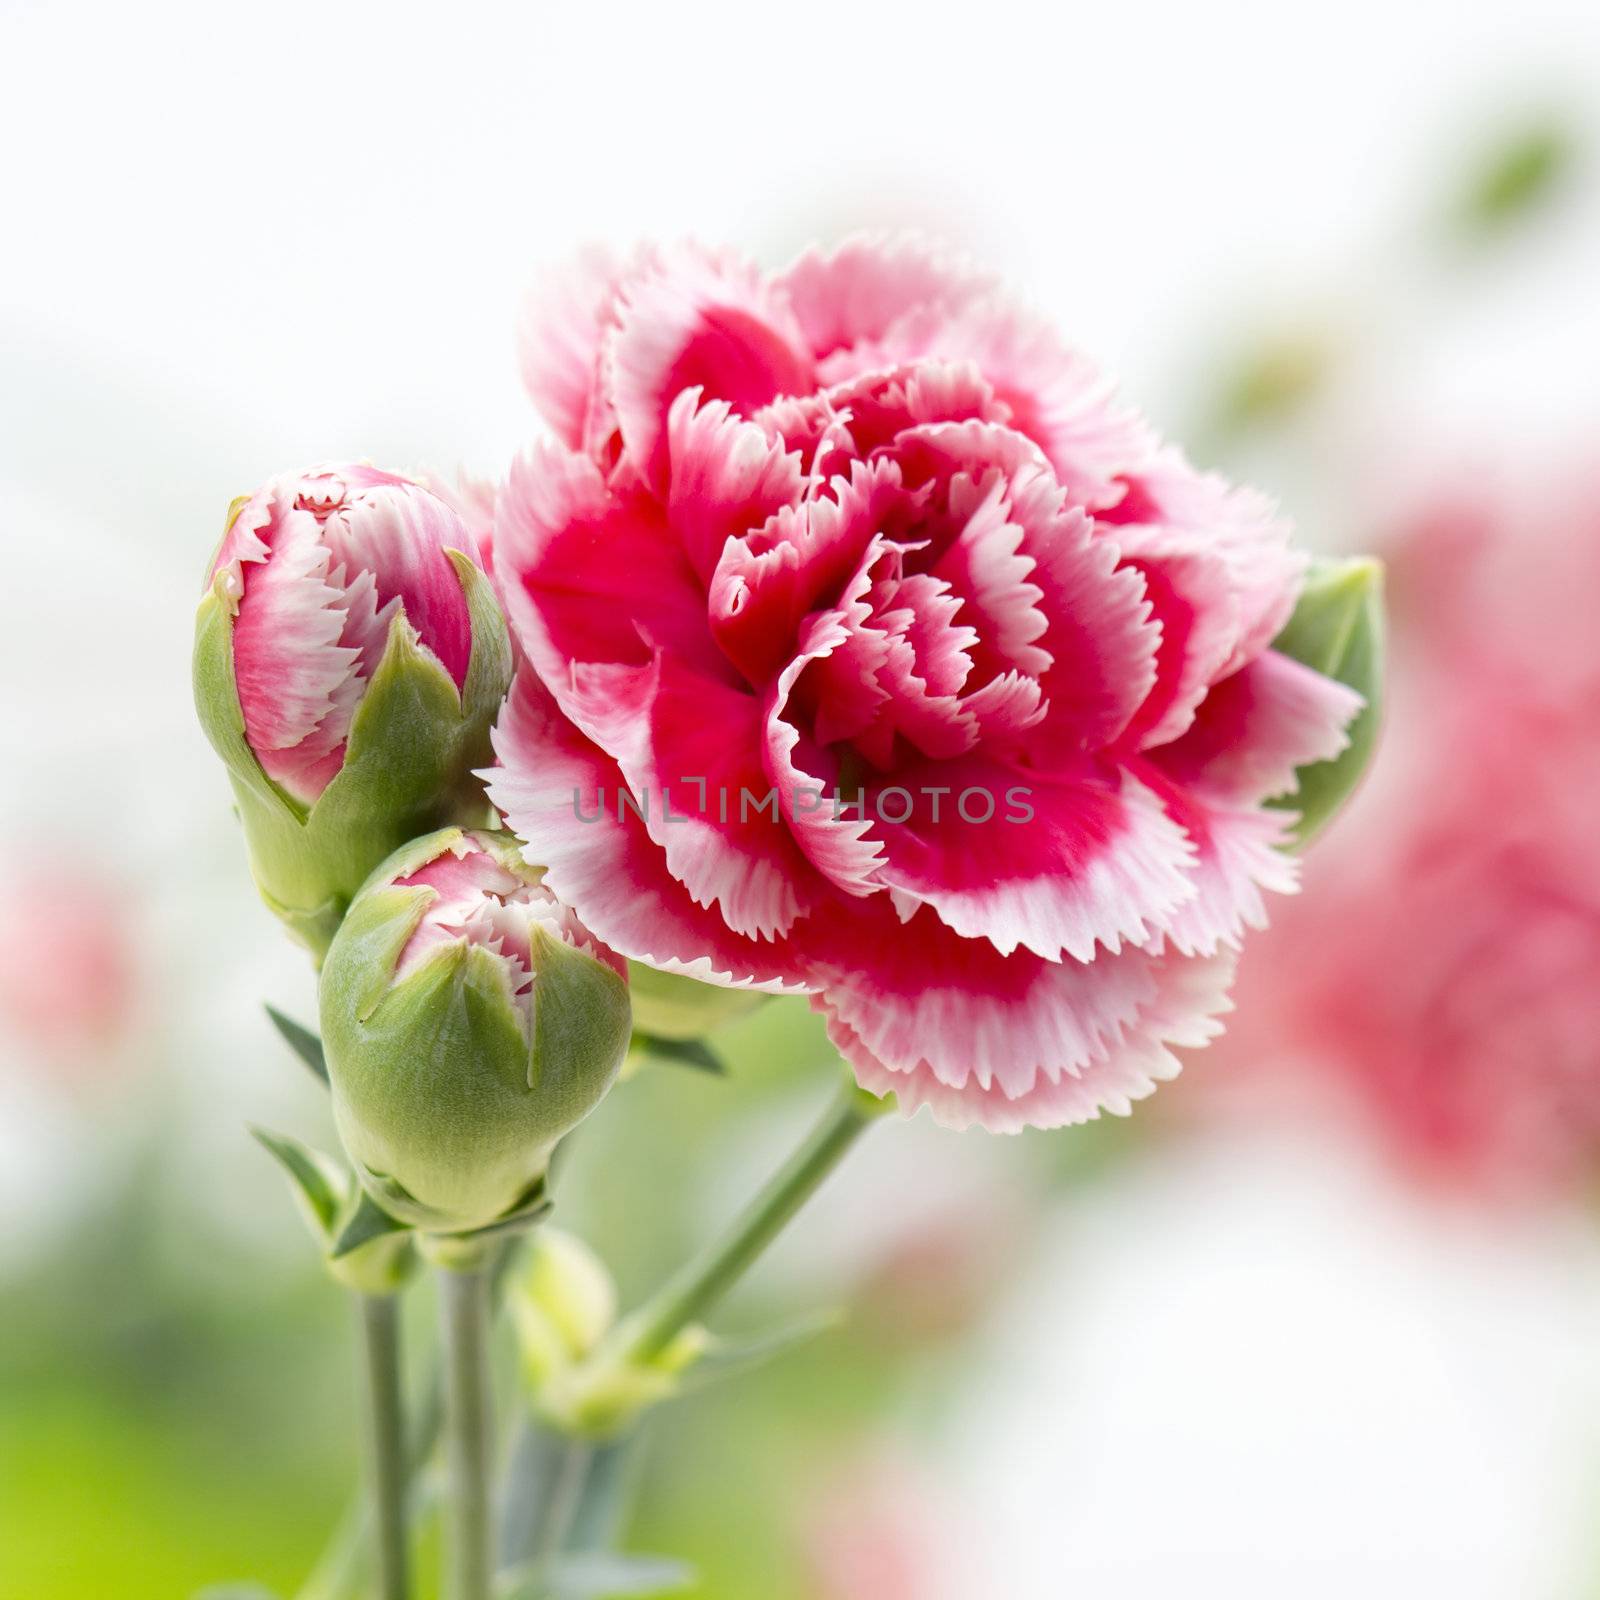 Carnations by miradrozdowski